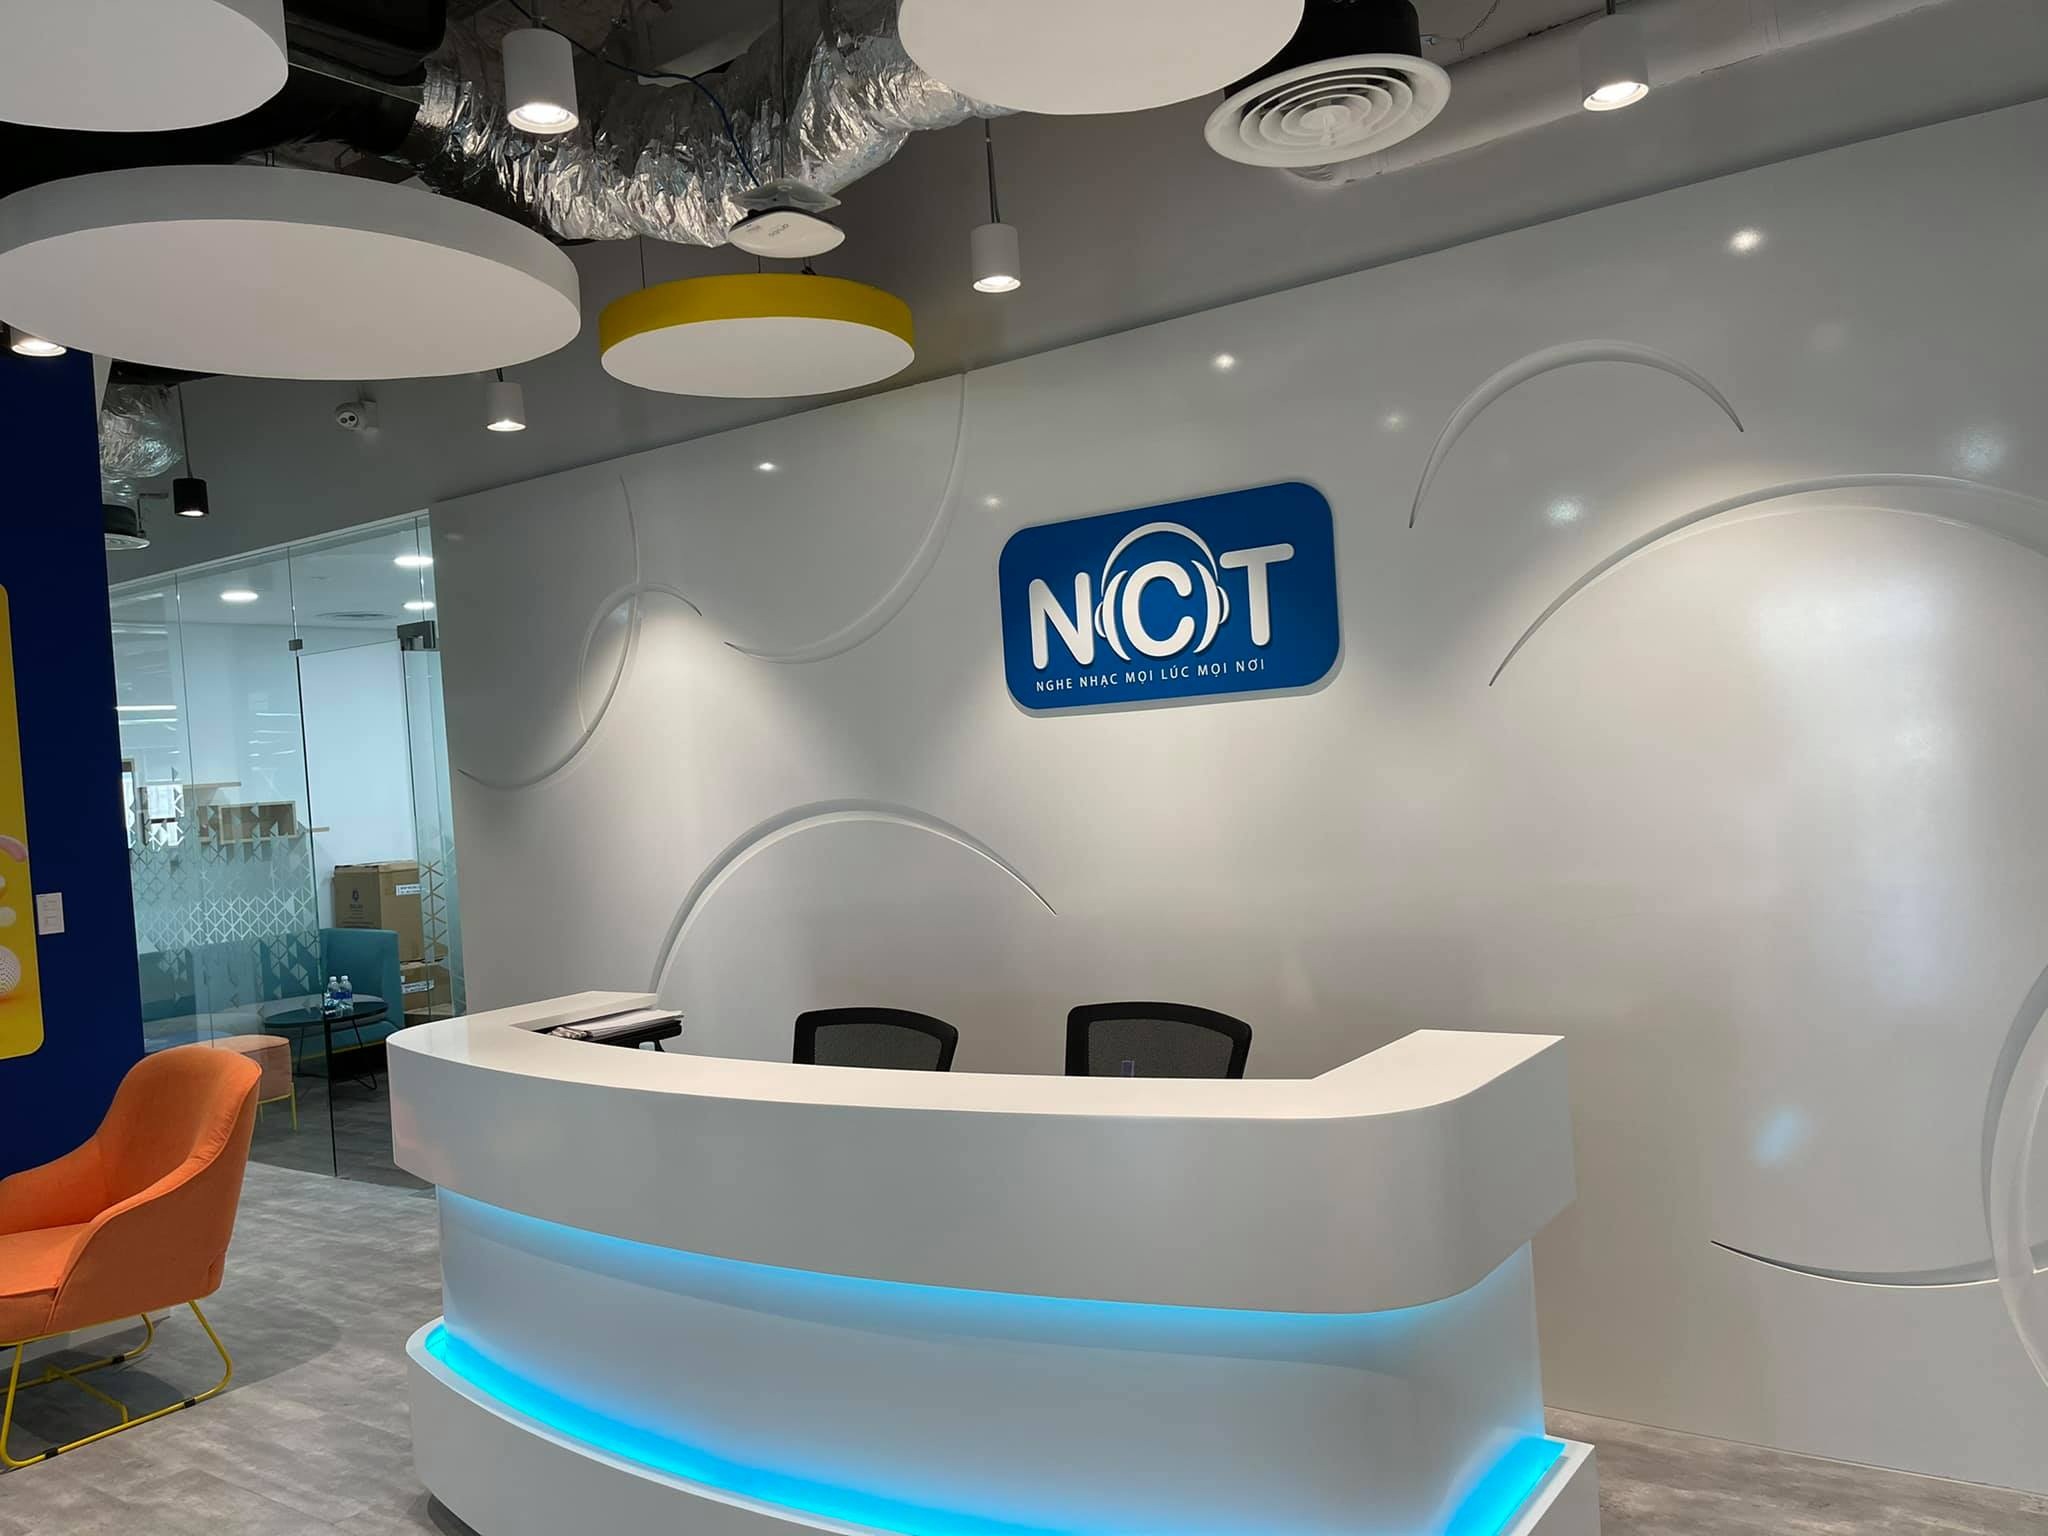 Jobs at NCT Corporation (Nhaccuatui.com)